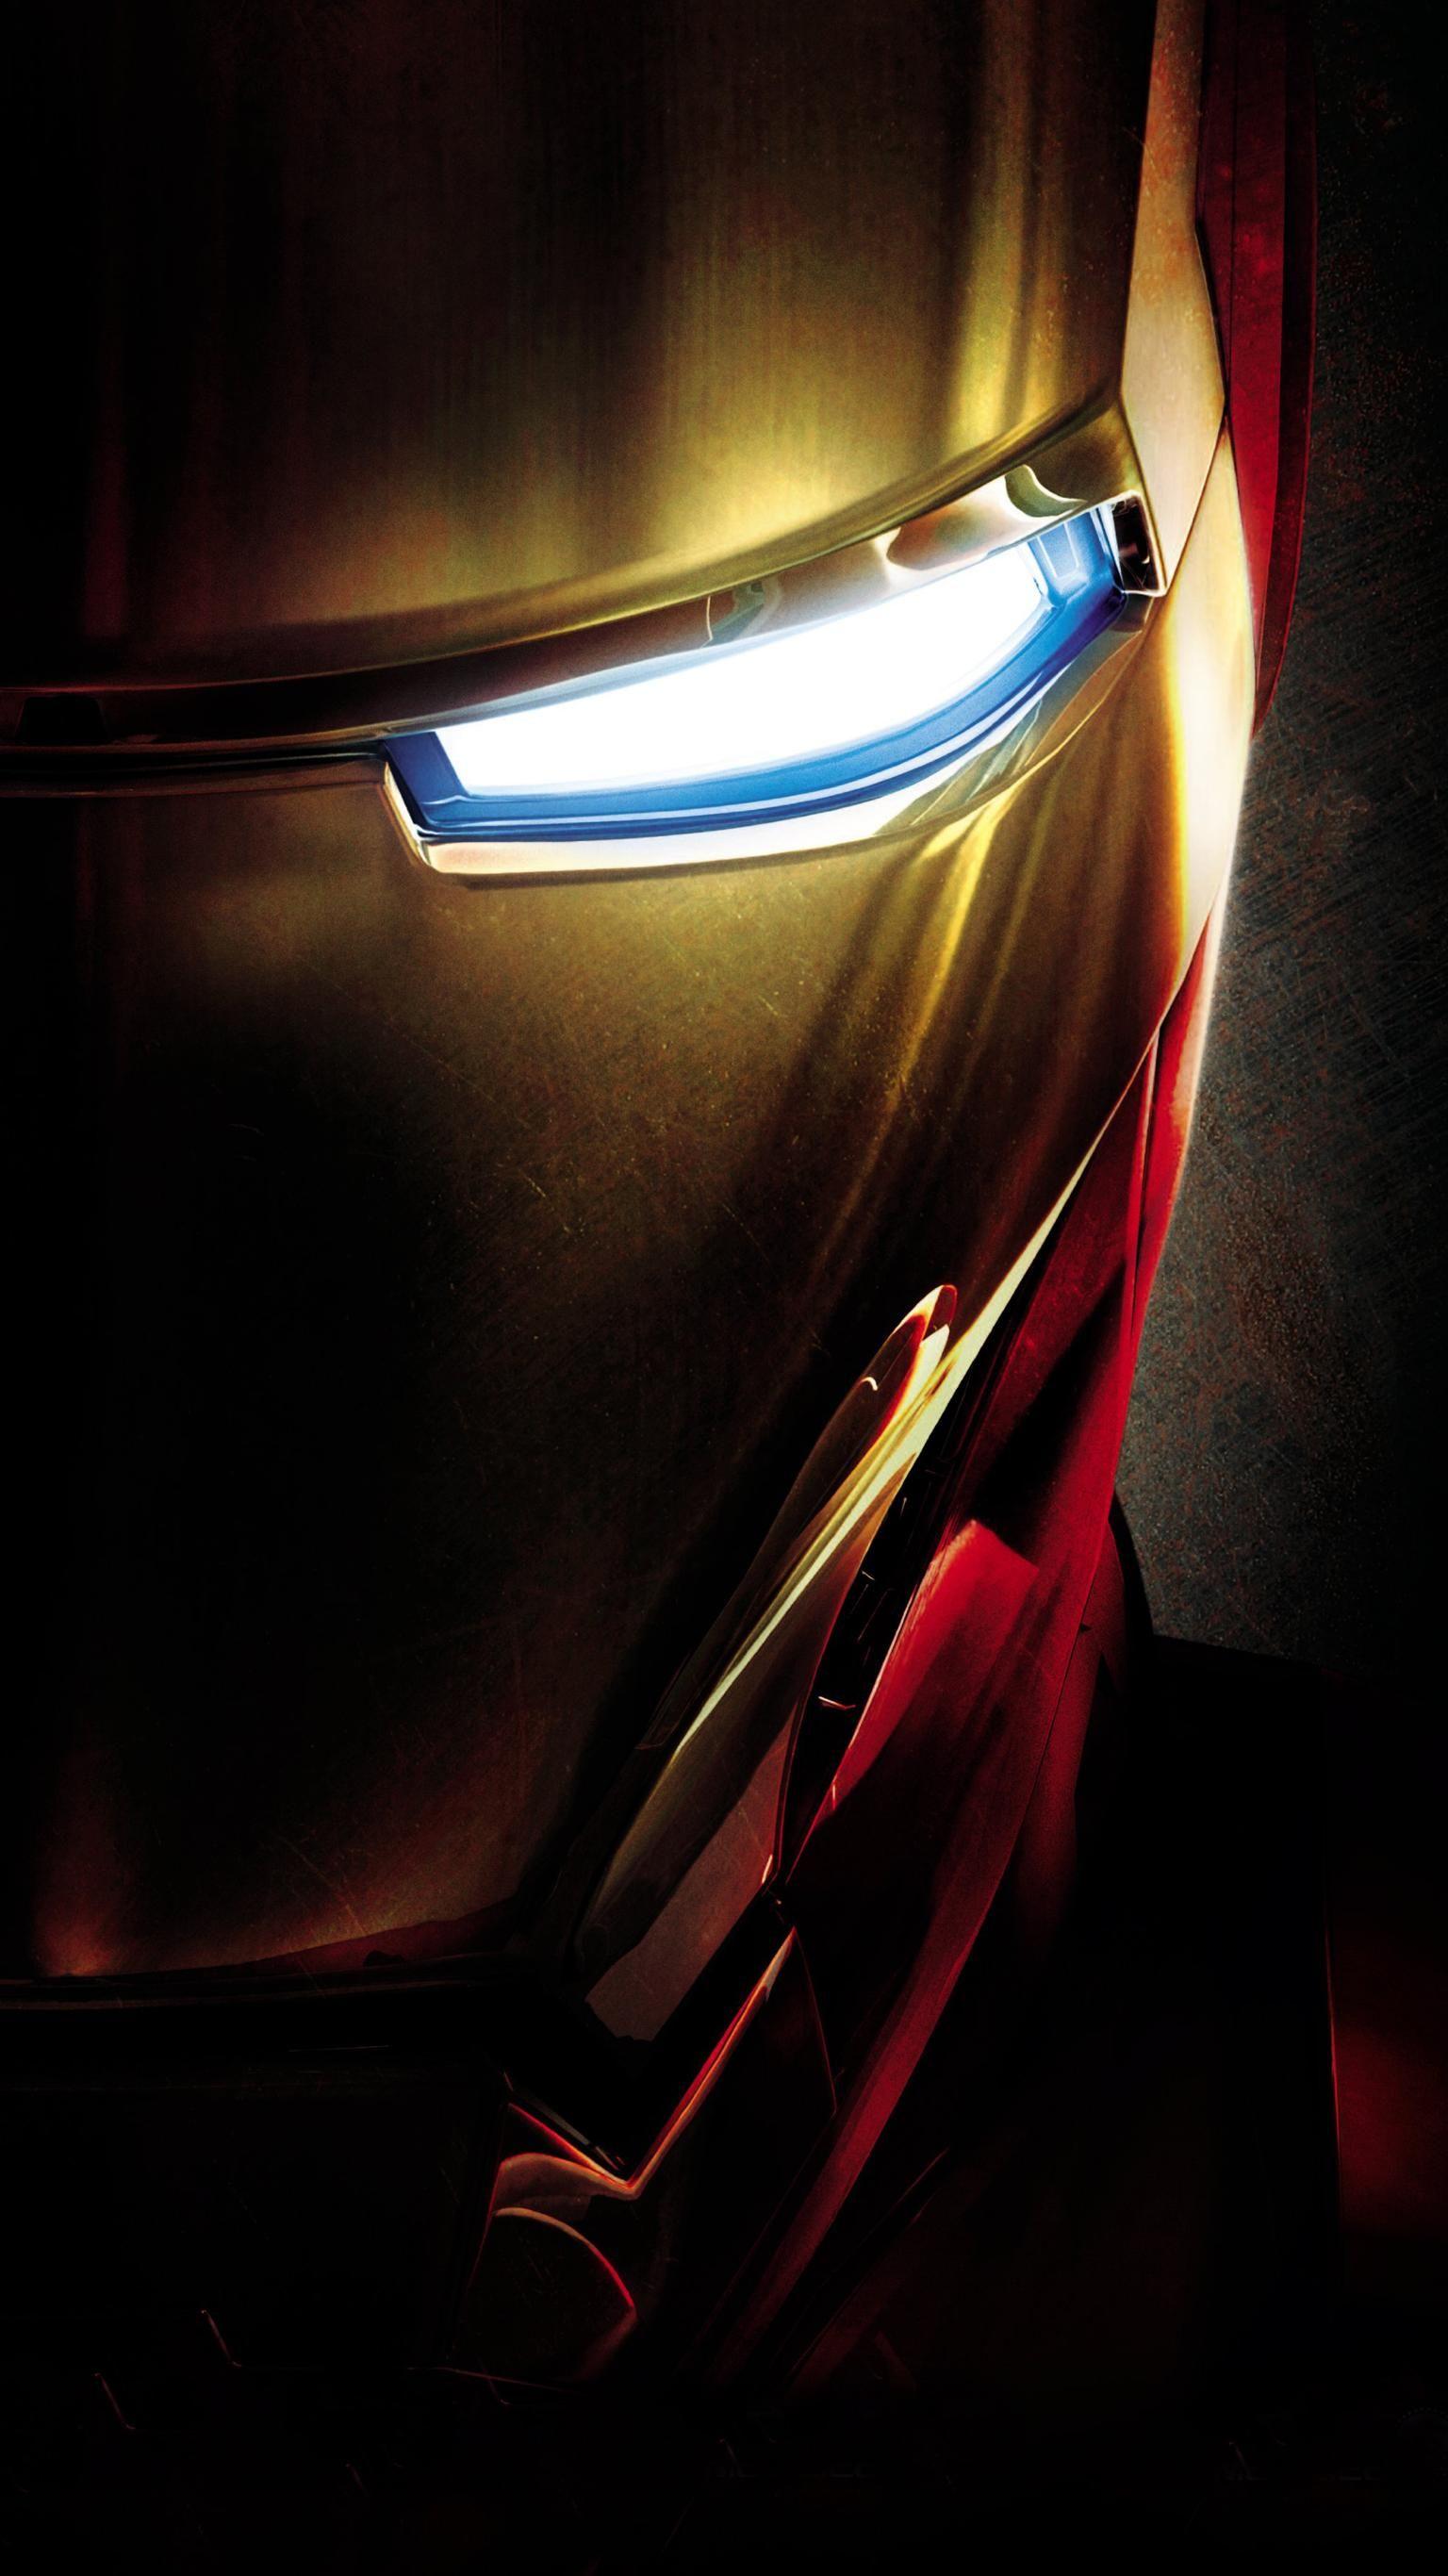 Iron Man (2008) Phone Wallpaper. Iron man movie, Iron man movie poster, Iron man wallpaper